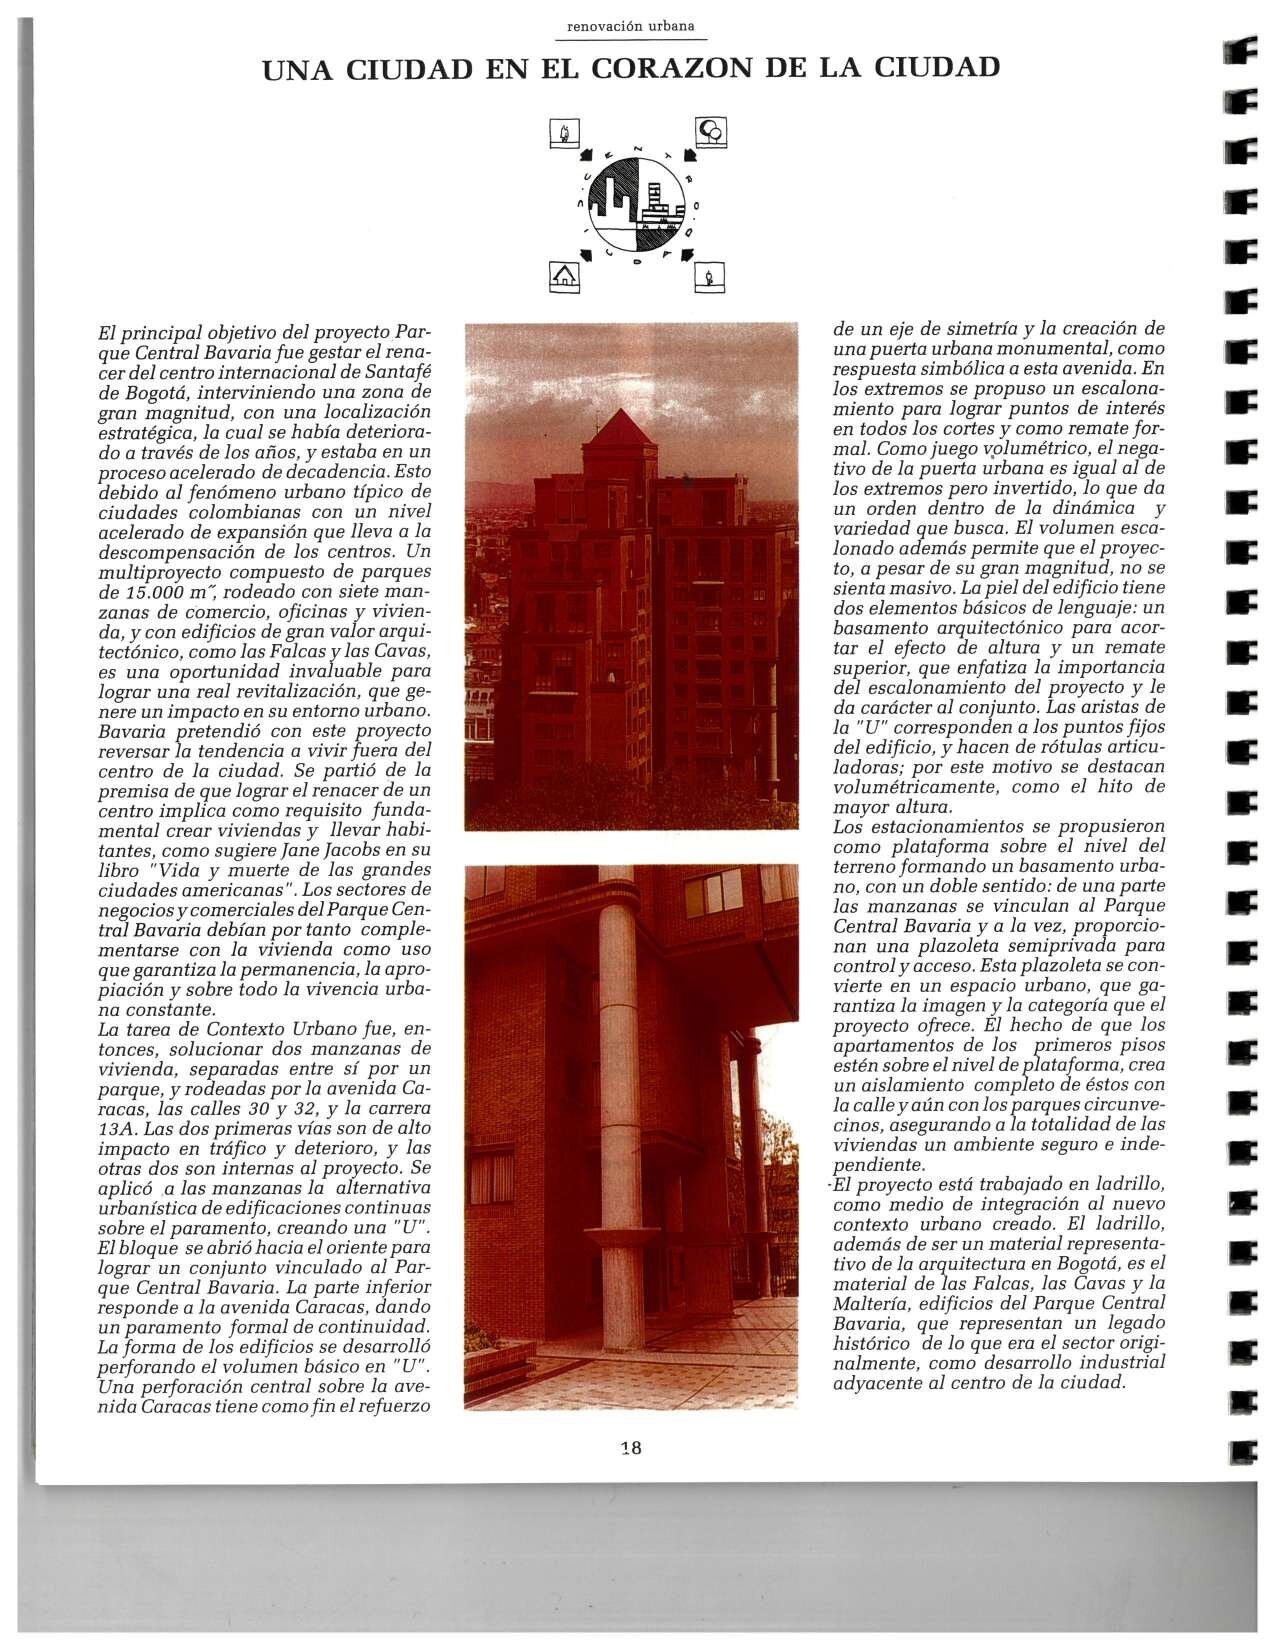 1995_Obra Contexto Urbano_Revista PROA_compressed_page-0018.jpg